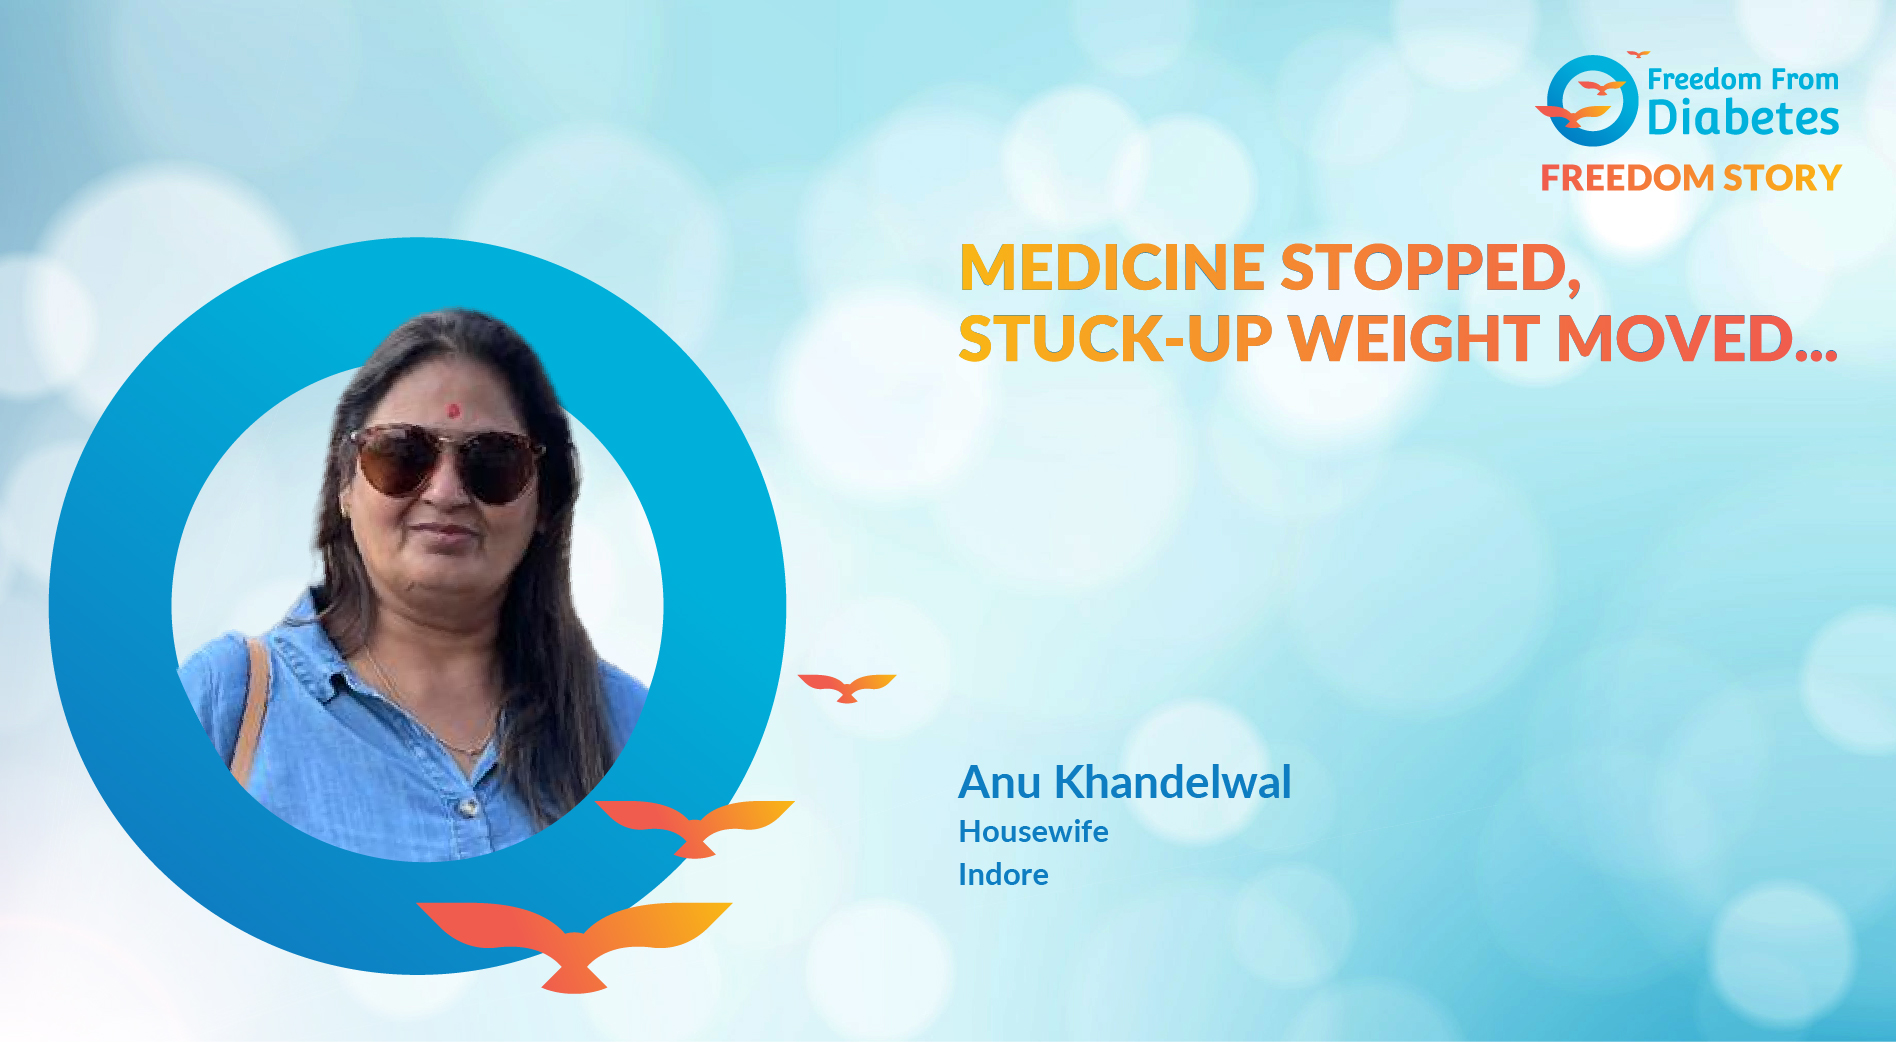 Anu Khandelwal: FFD set my health right